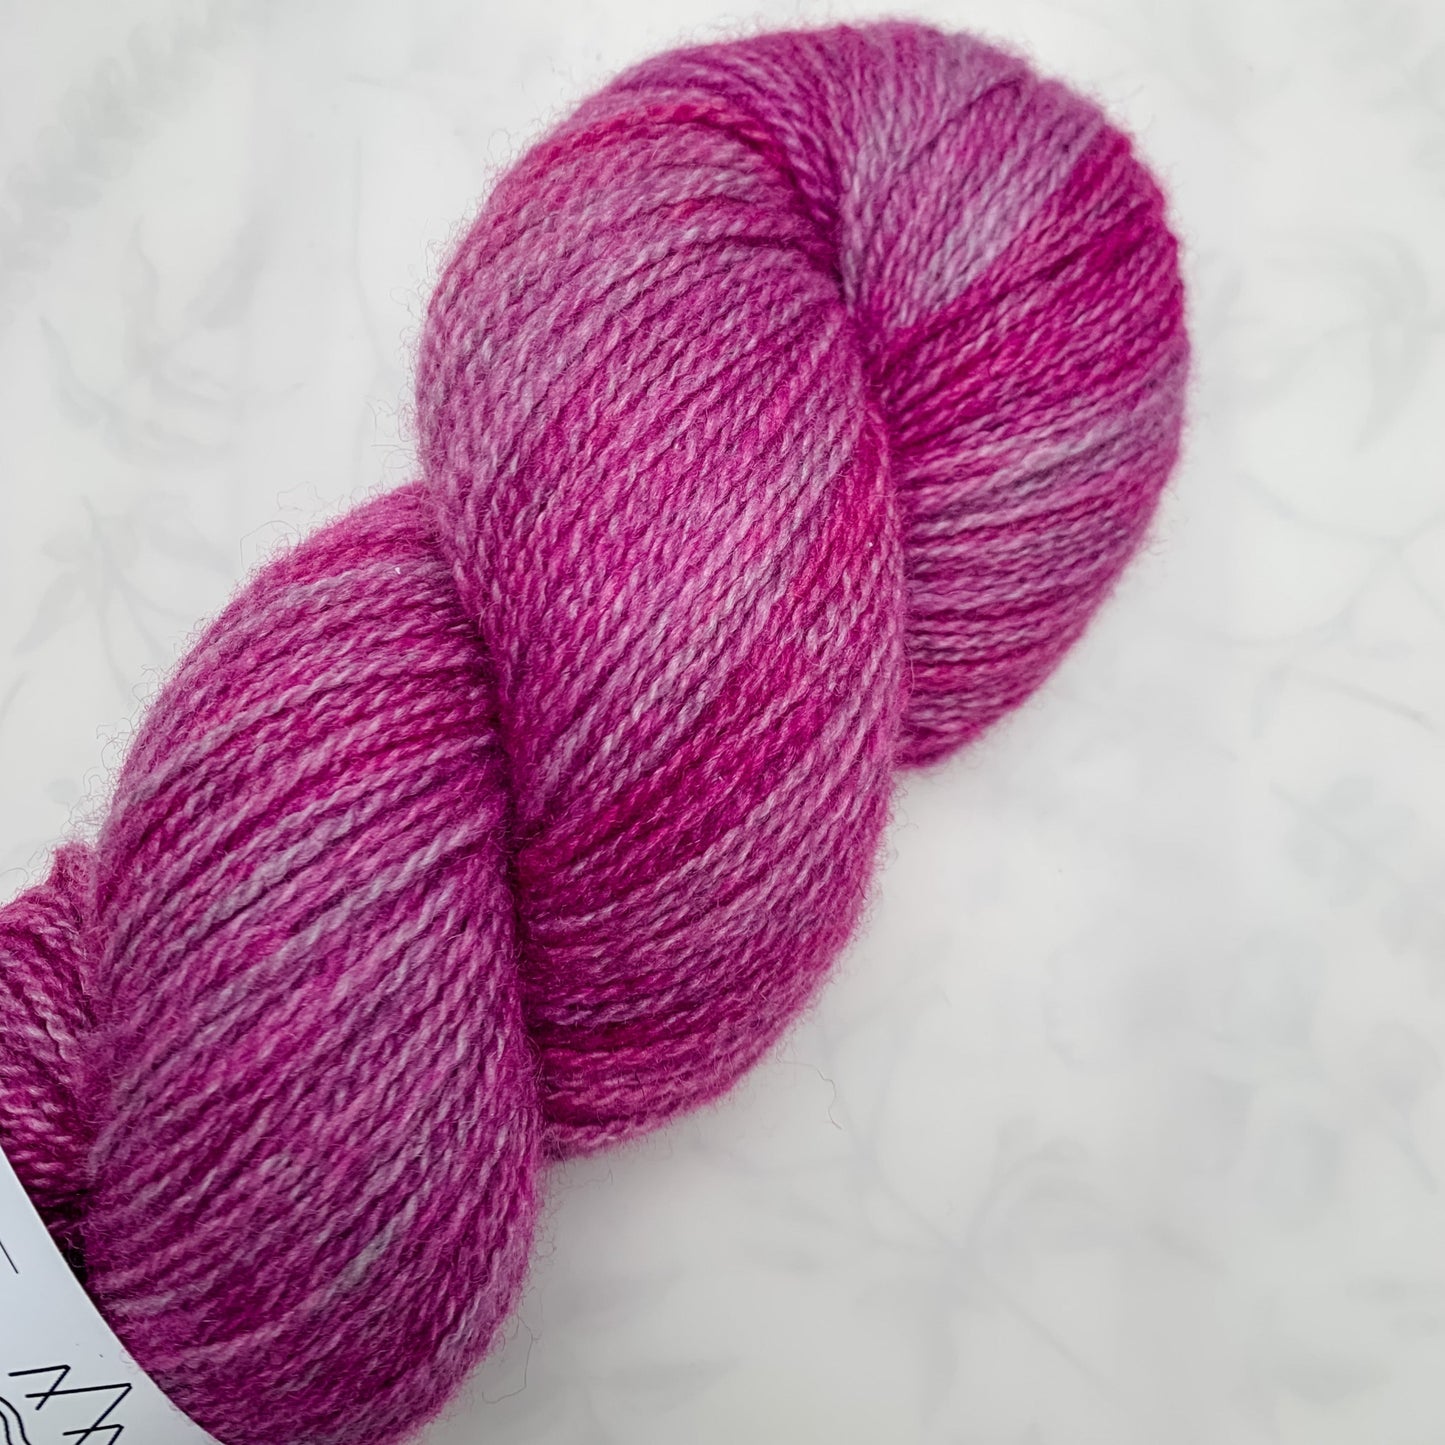 Raspberry Beret - Trollfjord sock - Hand Dyed Yarn - Variegated Yarn